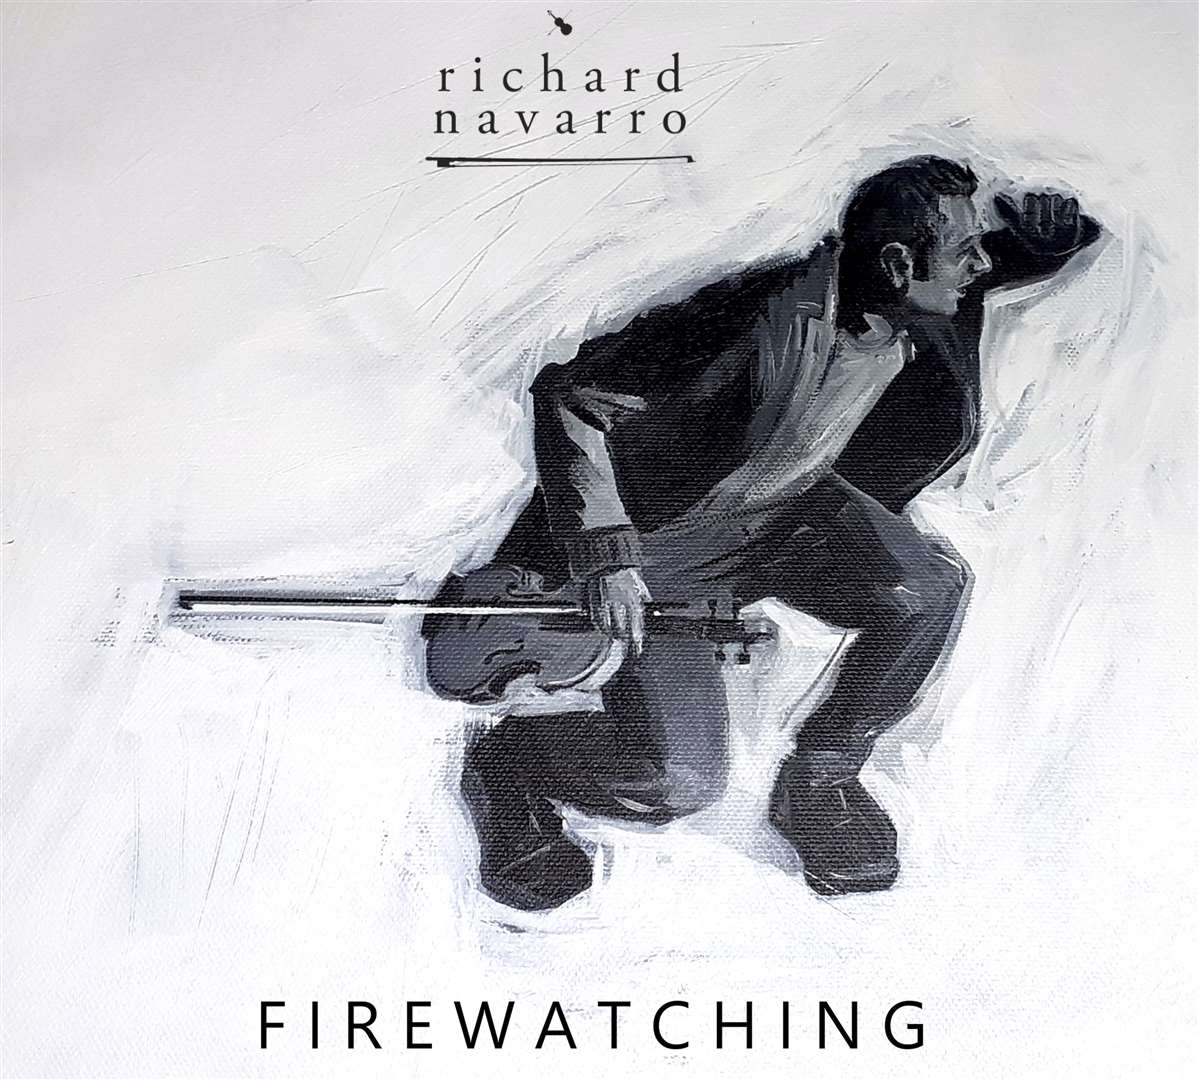 Firewatching by Richard Navarro